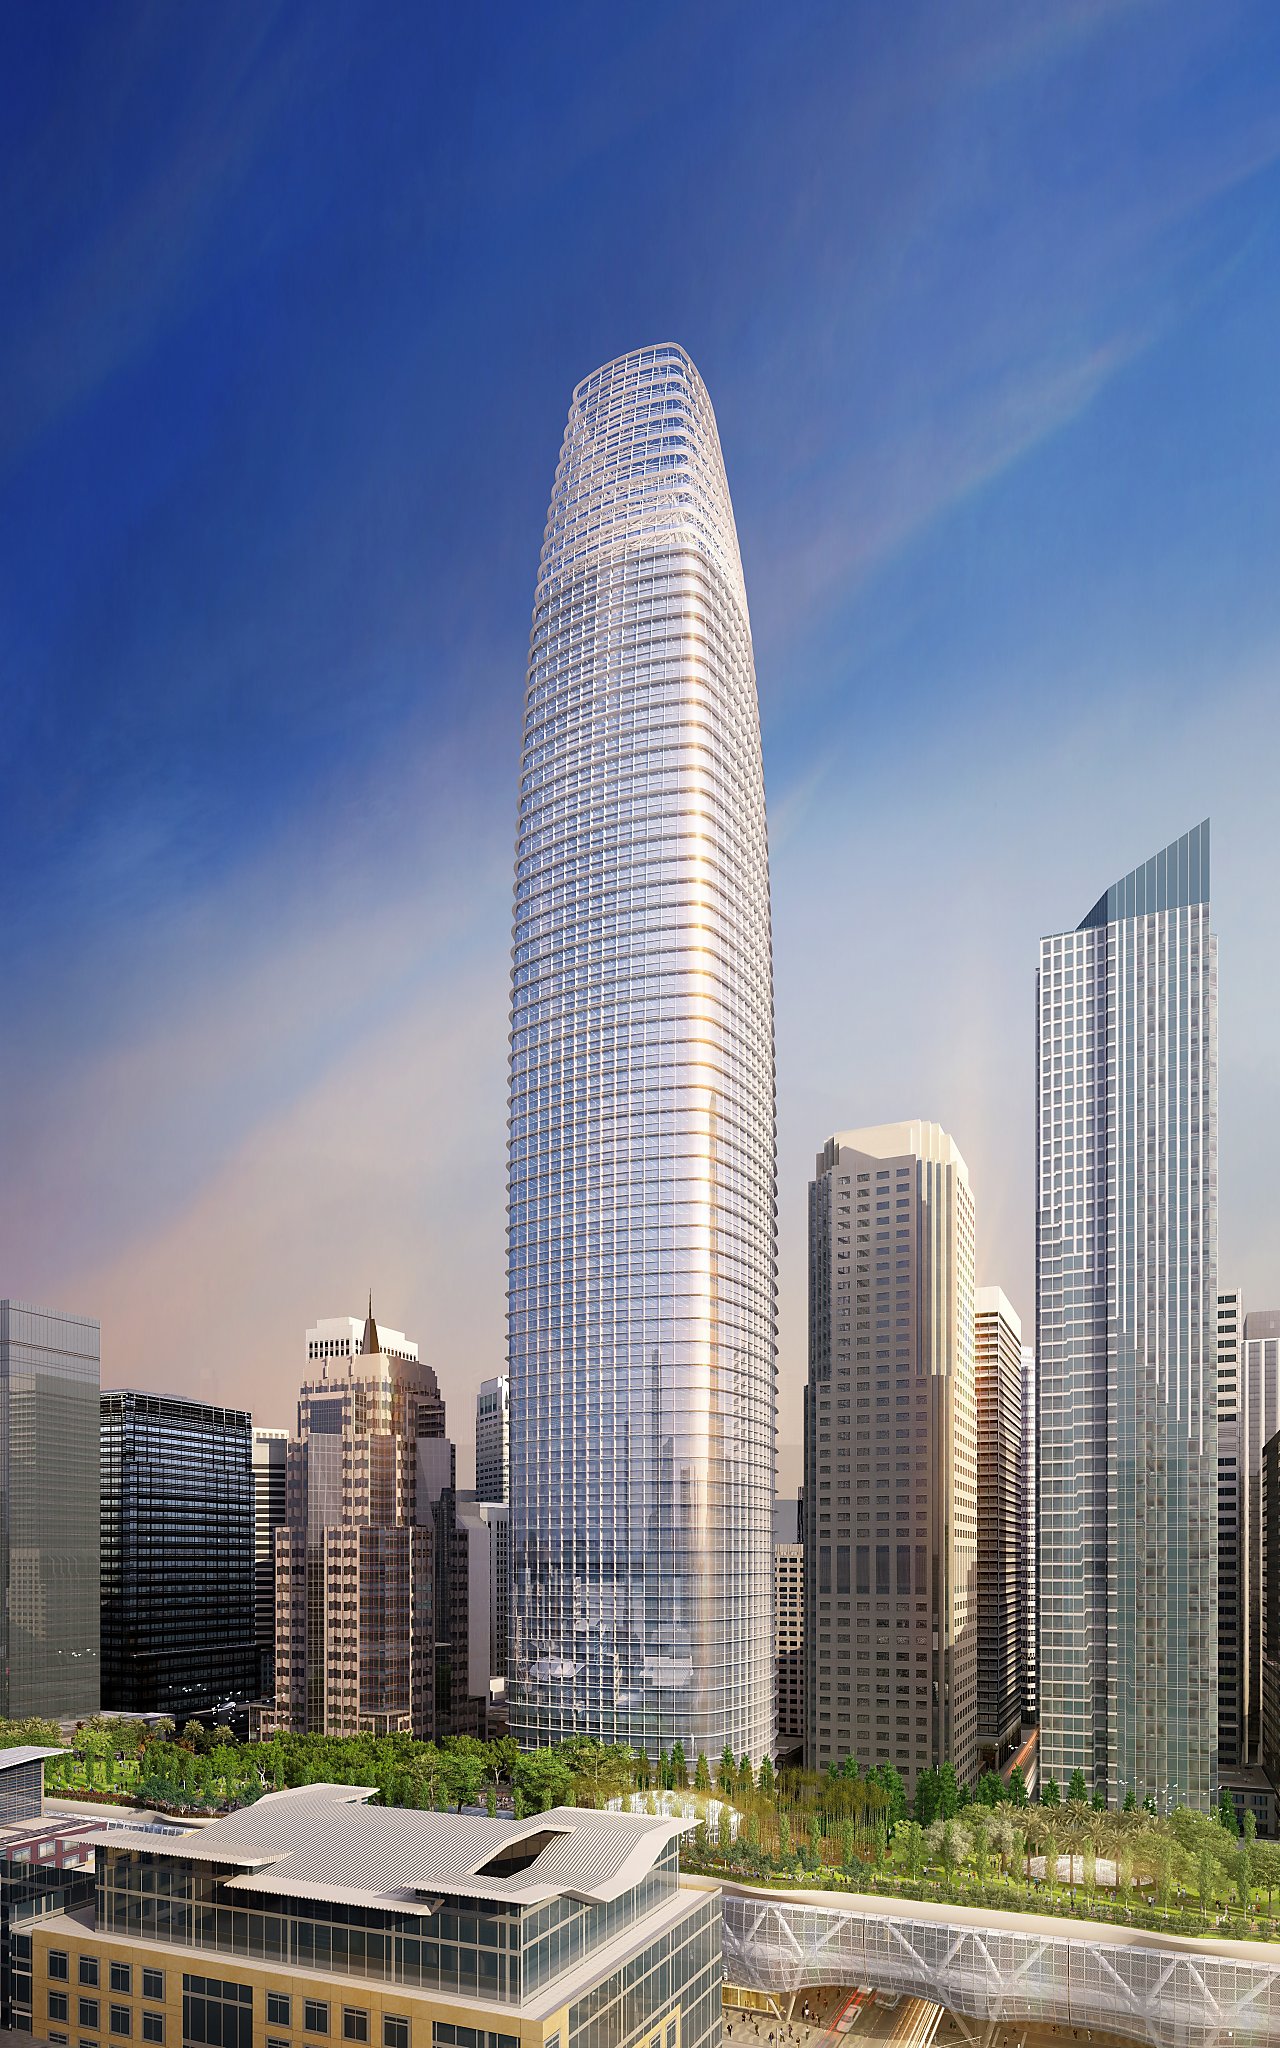 SF's tallest skyscraper plans revamped - SFGate